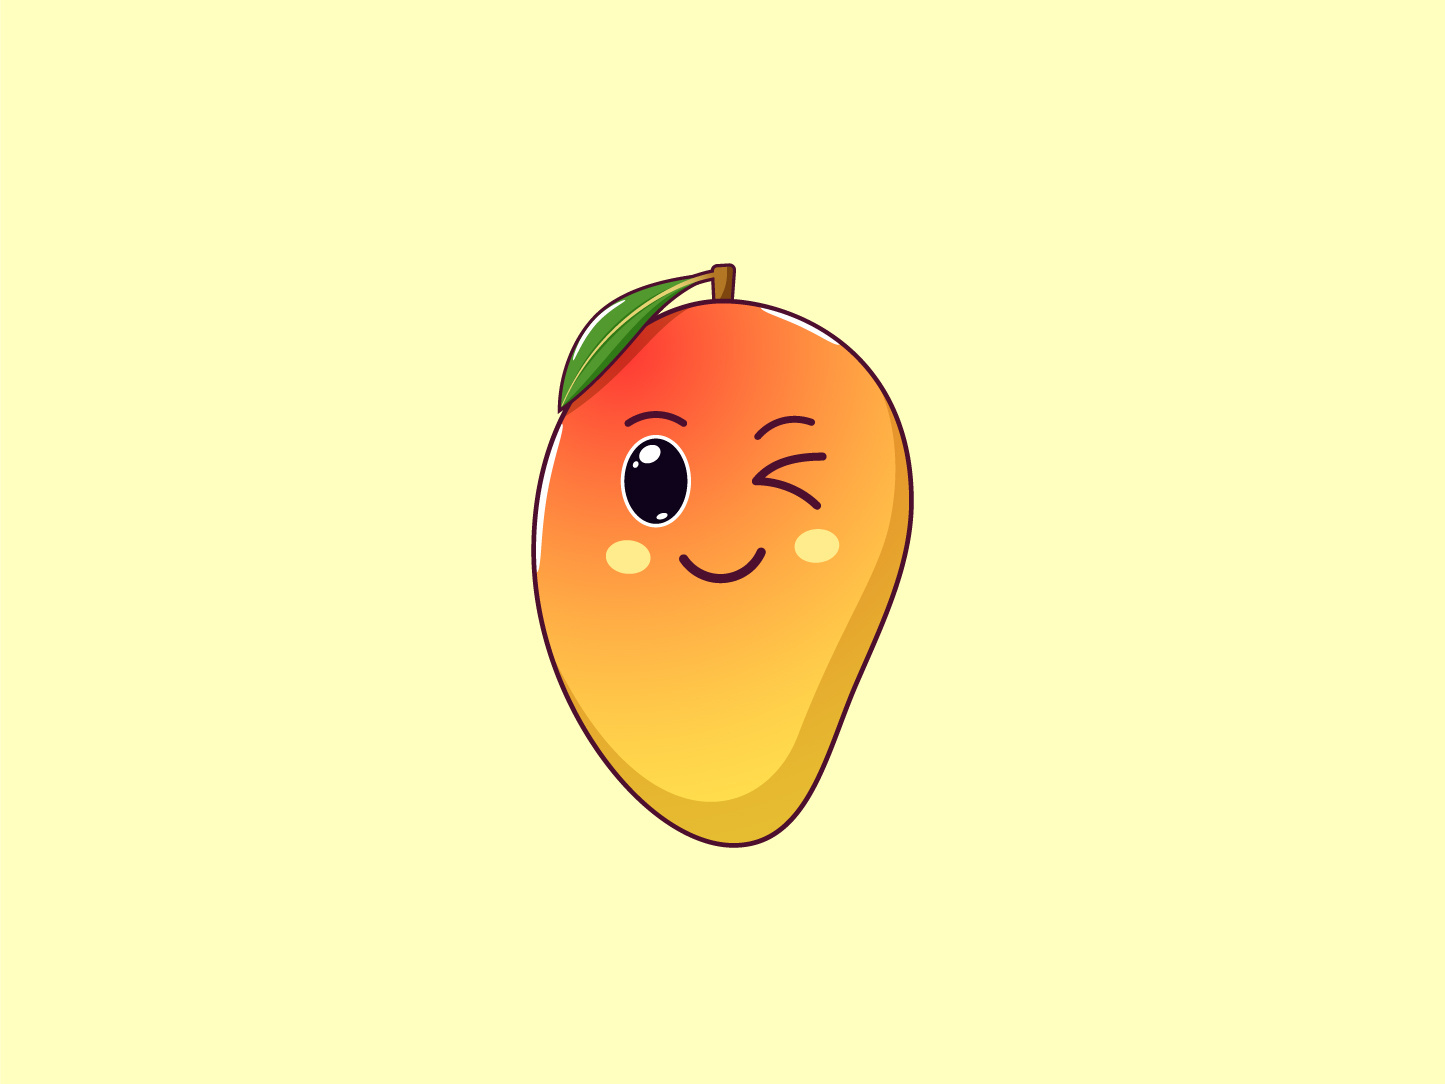 Cute Kawaii Mango, Cartoon Fruit by Dmitry Mayer on Dribbble